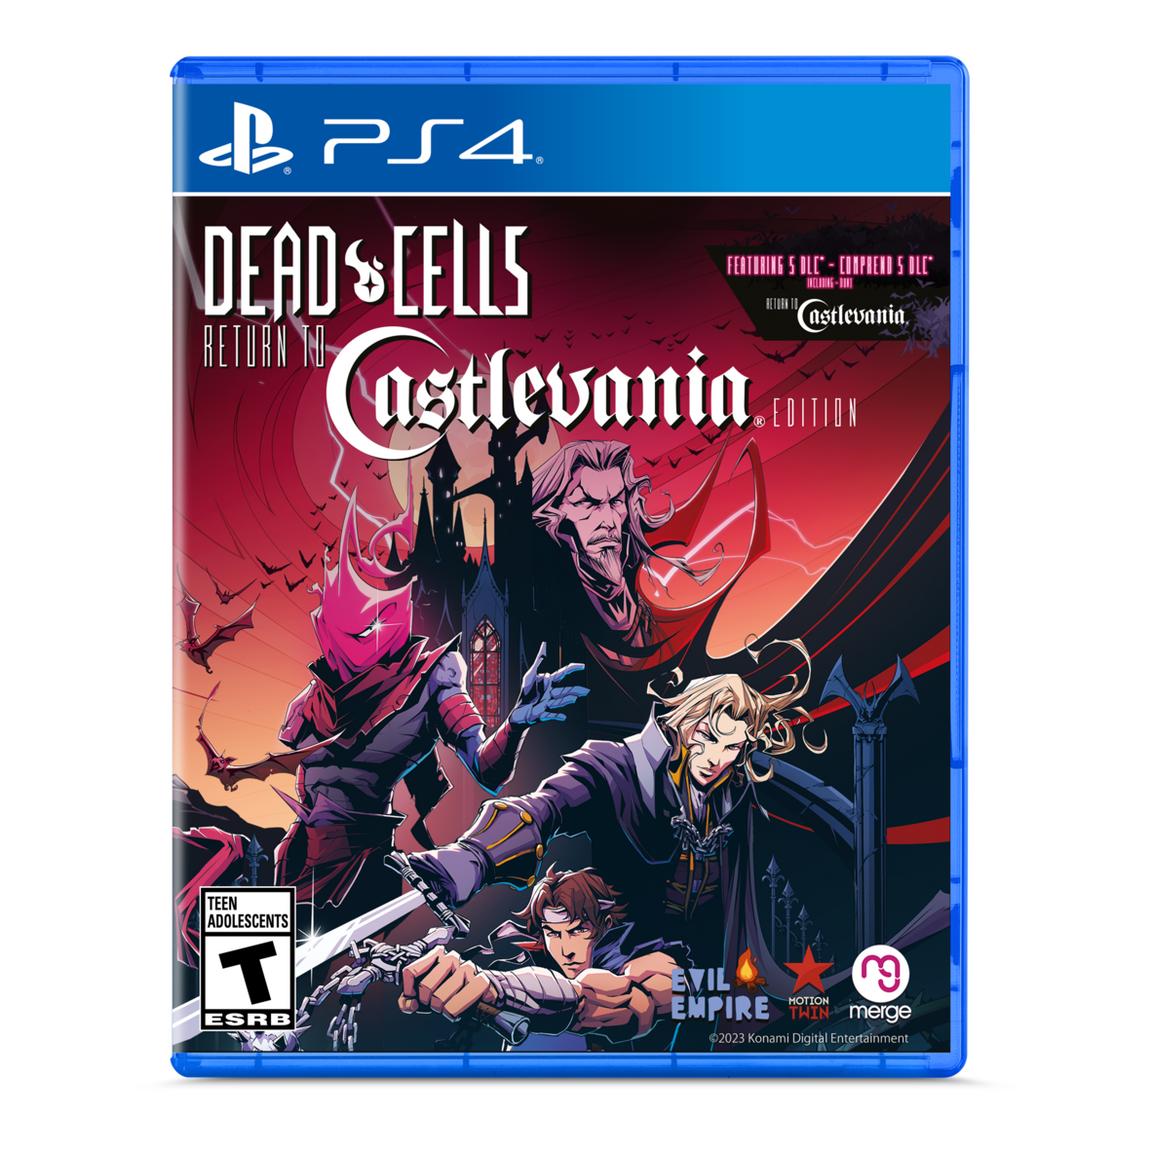 Видеоигра Dead Cells: Return to Castlevania Edition - PlayStation 4 игра nintendo для switch dead cells return to castlevania edition